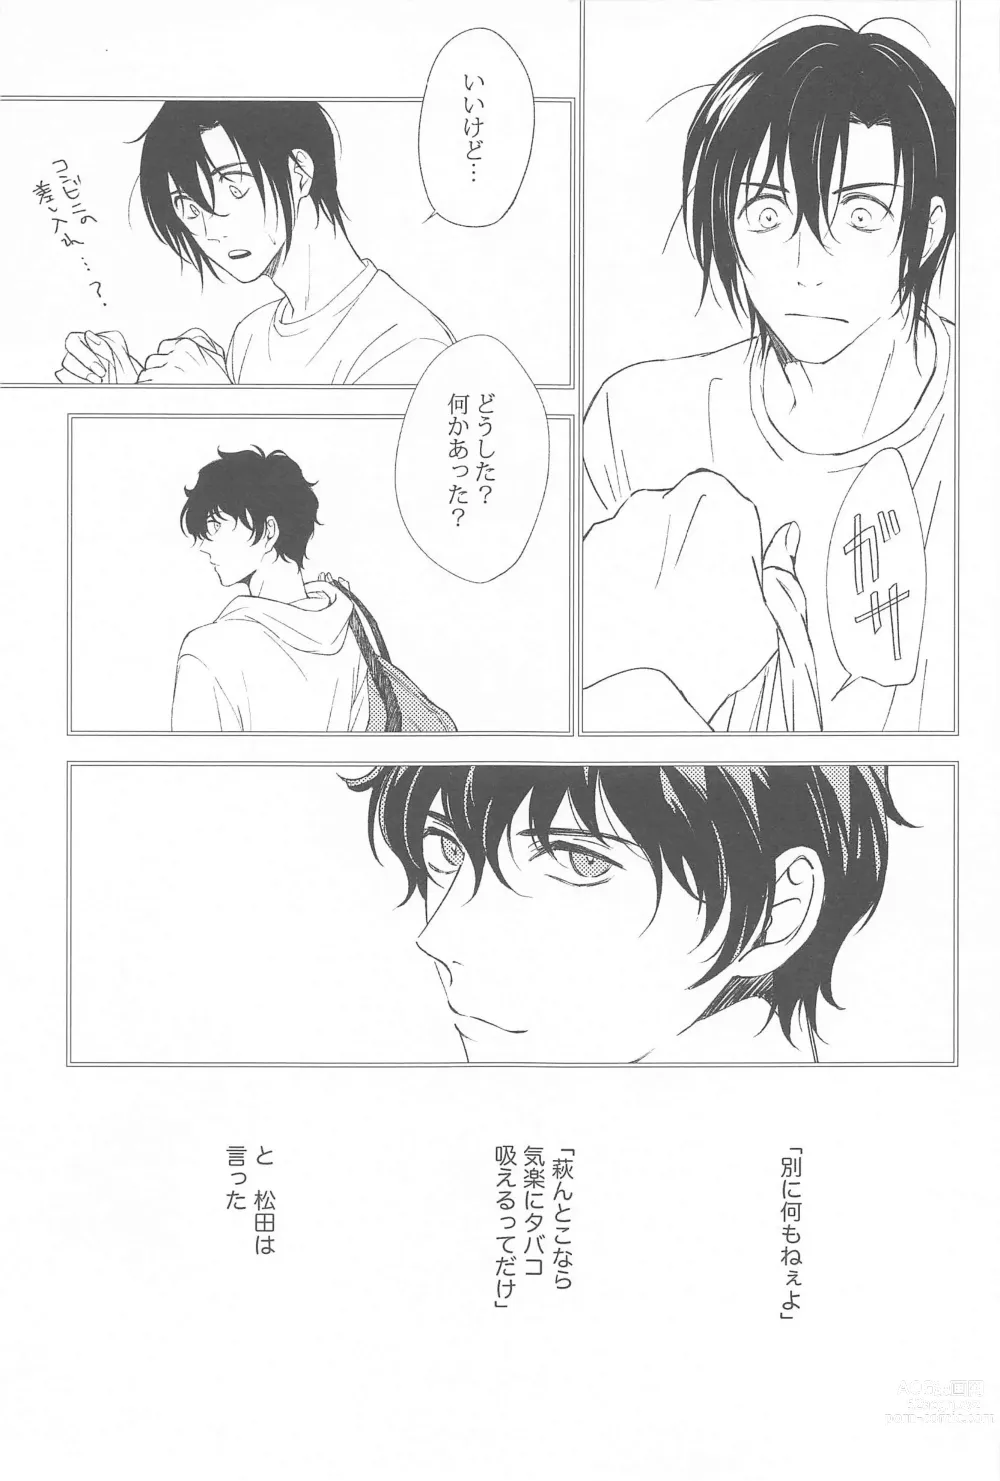 Page 12 of doujinshi ORTHONASAL